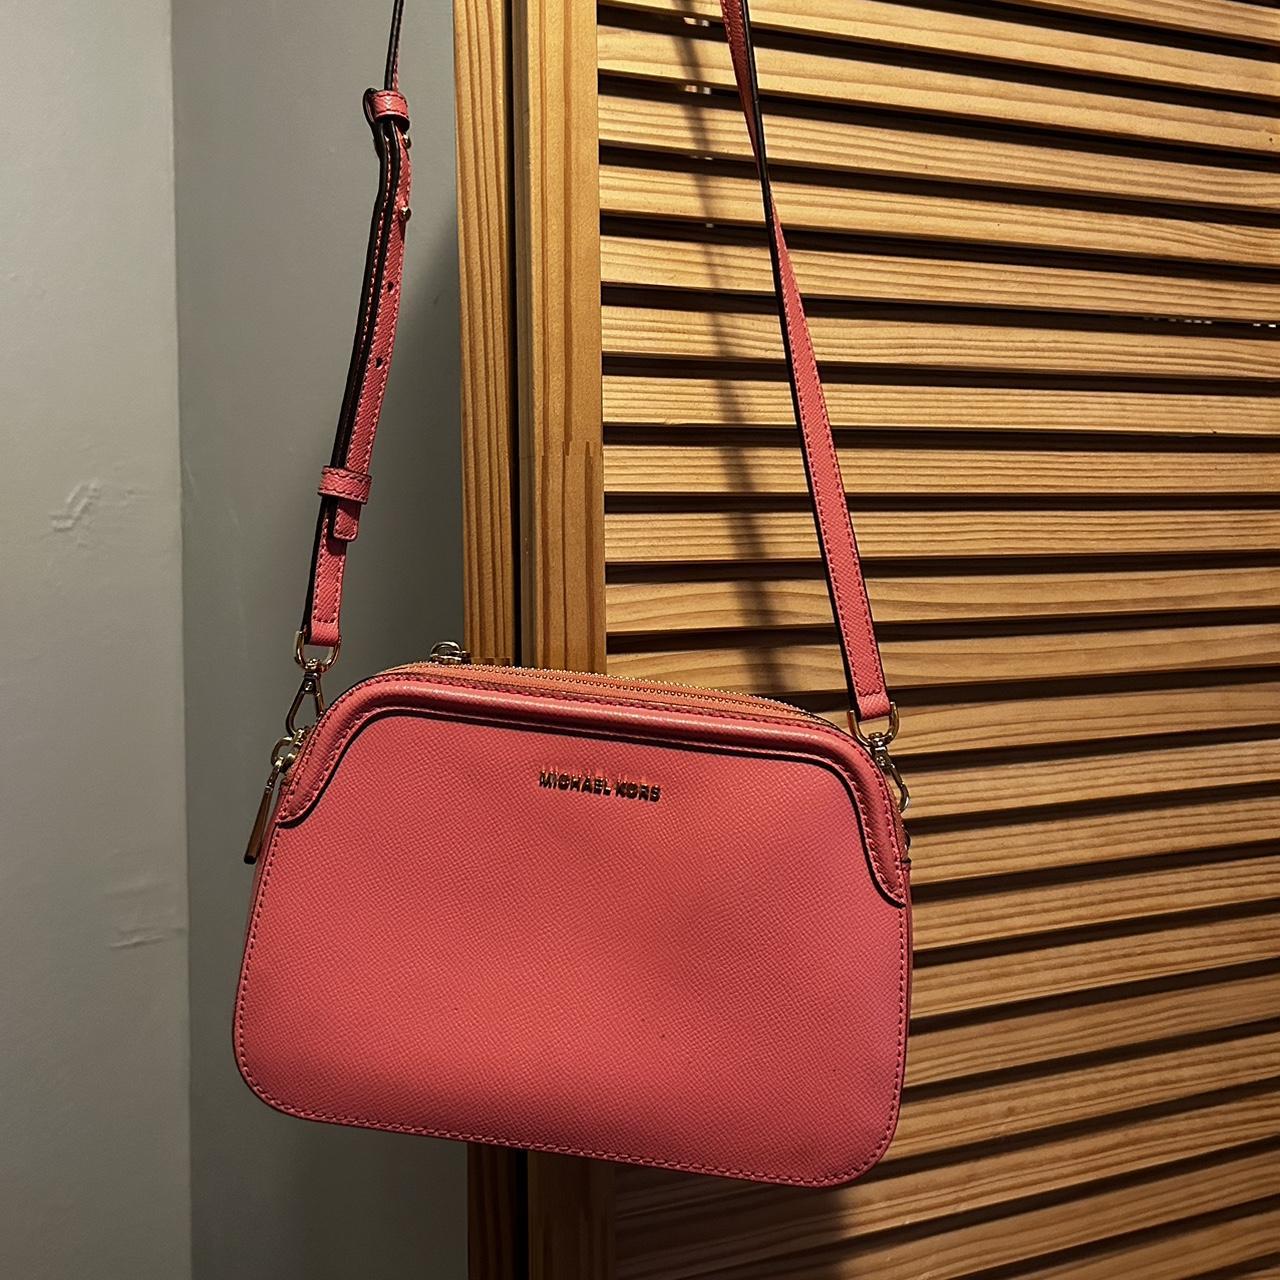 Michael Kors Sling Bag (Pink) Authentic